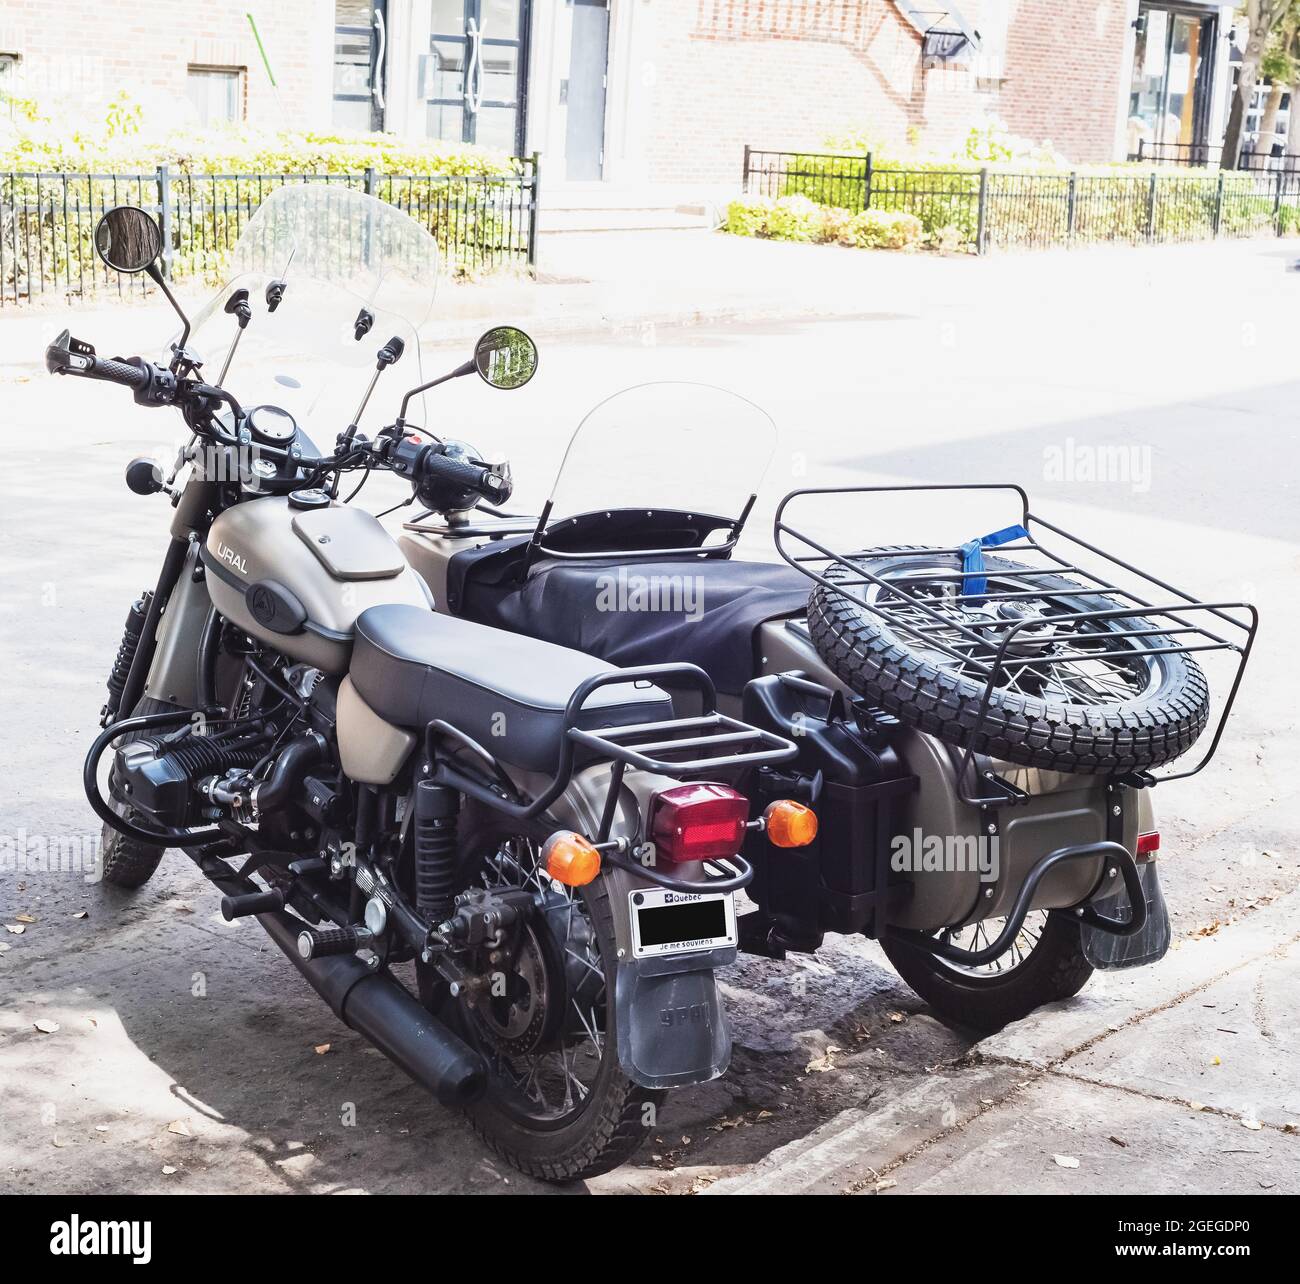 Ural Motorcycle - views Stock Photo